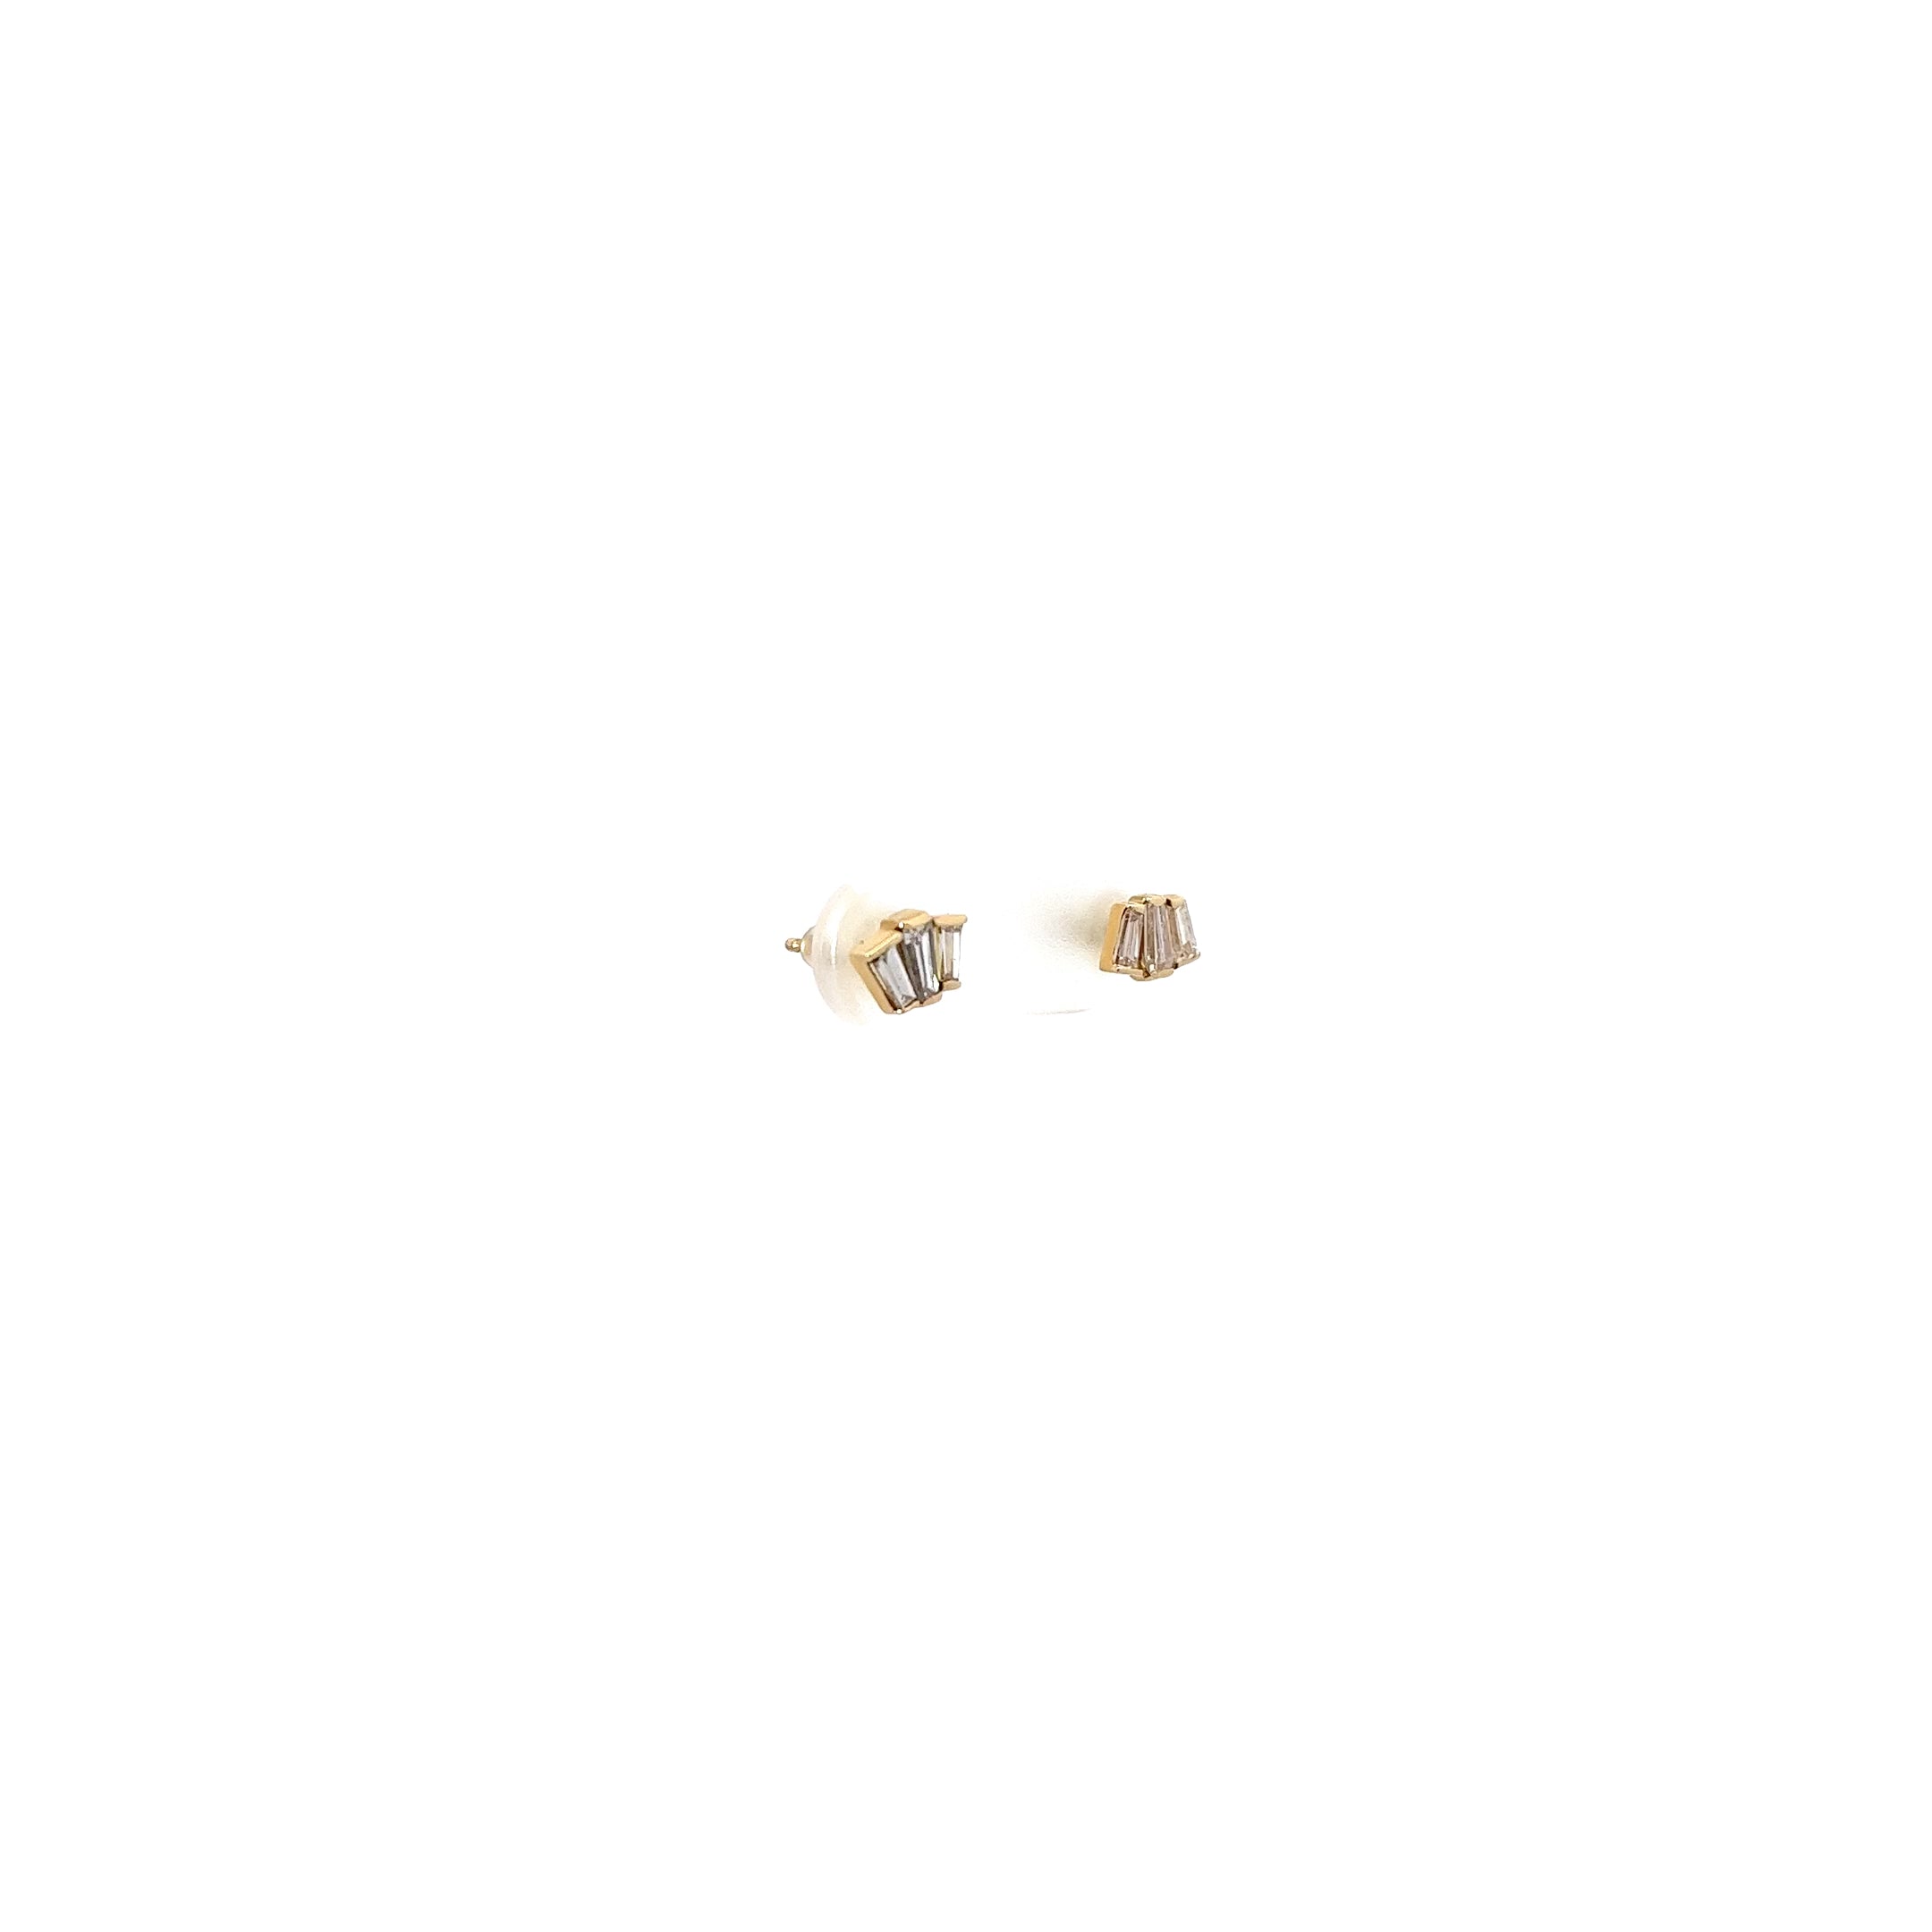 14K YELLOW OR WHITE GOLD .35CT F VS2 BAGUETTE SHAPED DIAMOND EARRINGS